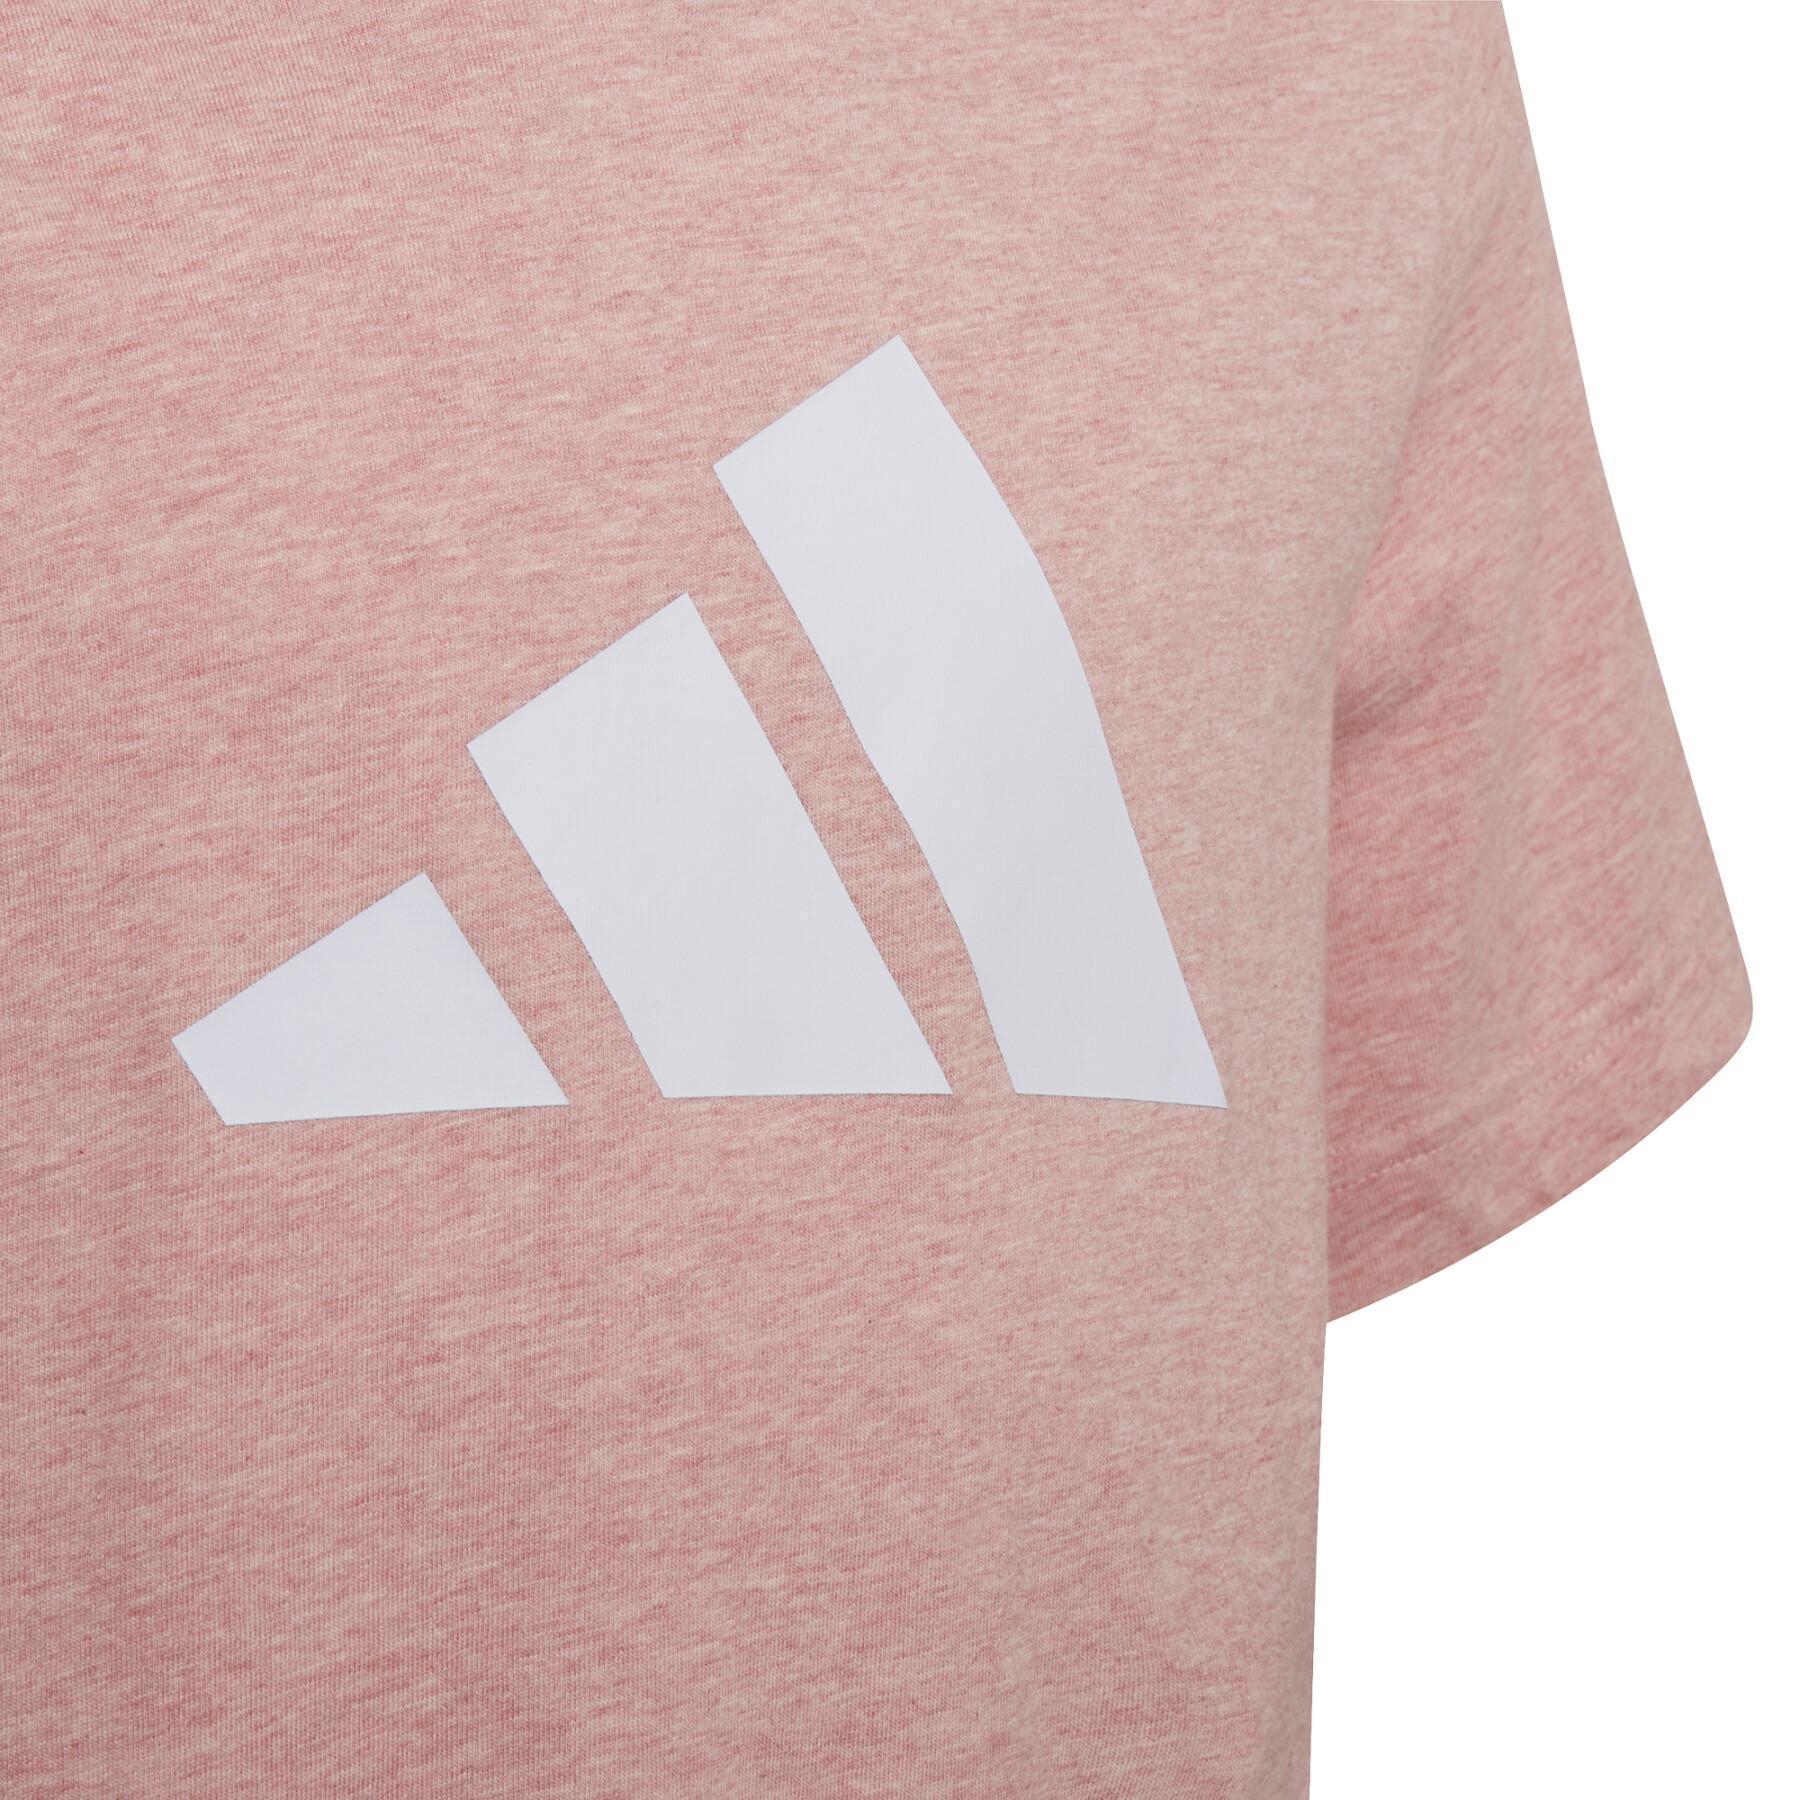 Kinder T-Shirt adidas Future Icons 3-Stripes Logo